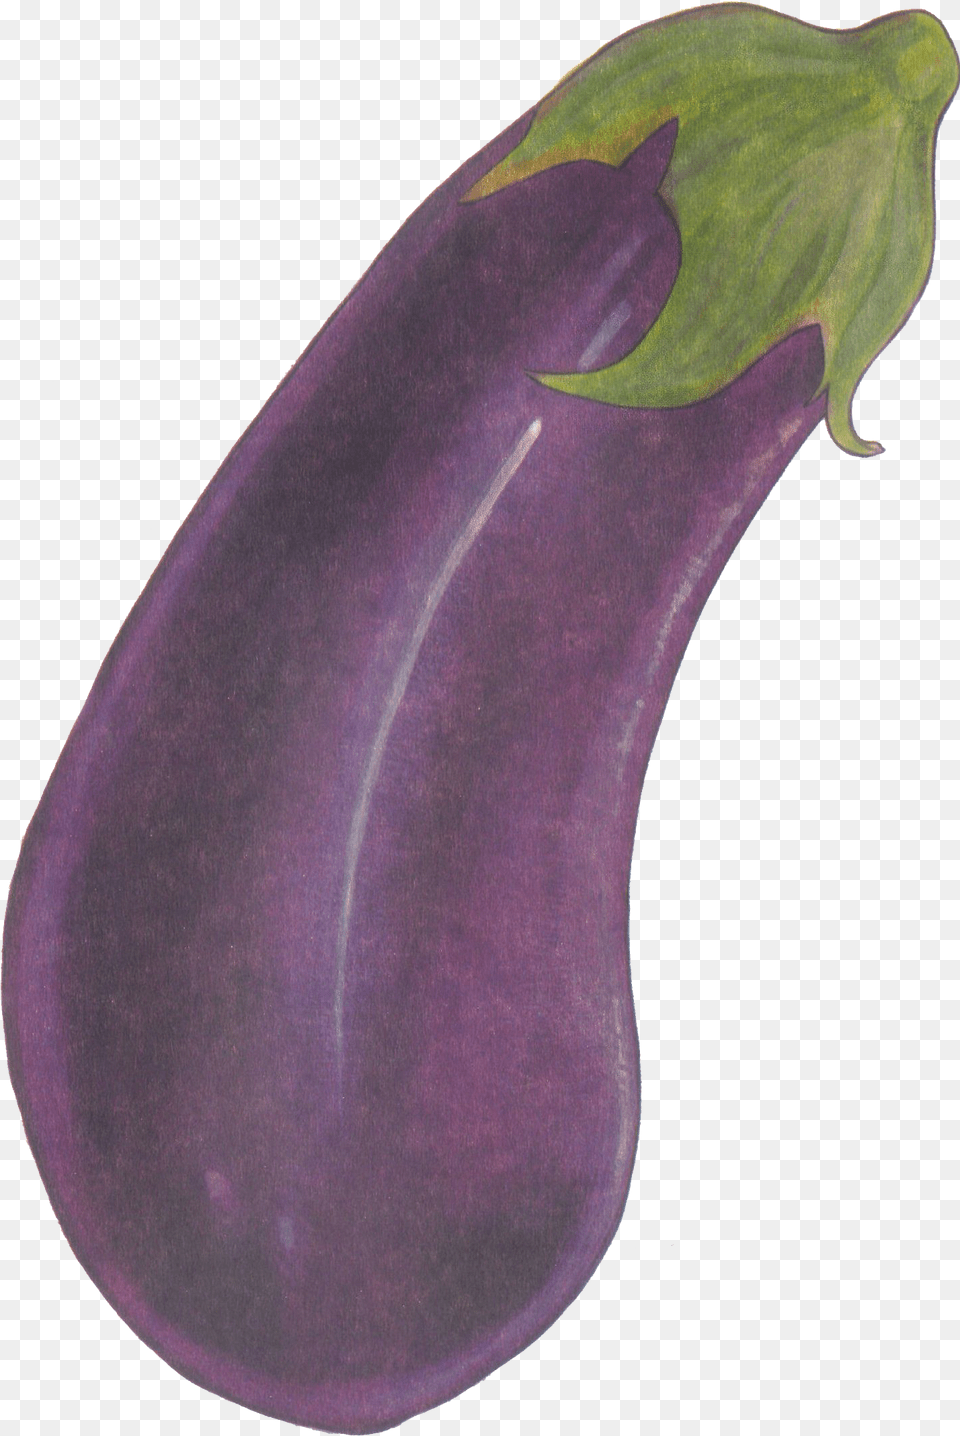 Eggplant Purple Health Love Eggplant 1427 Eggplant, Food, Produce, Plant, Vegetable Free Png Download